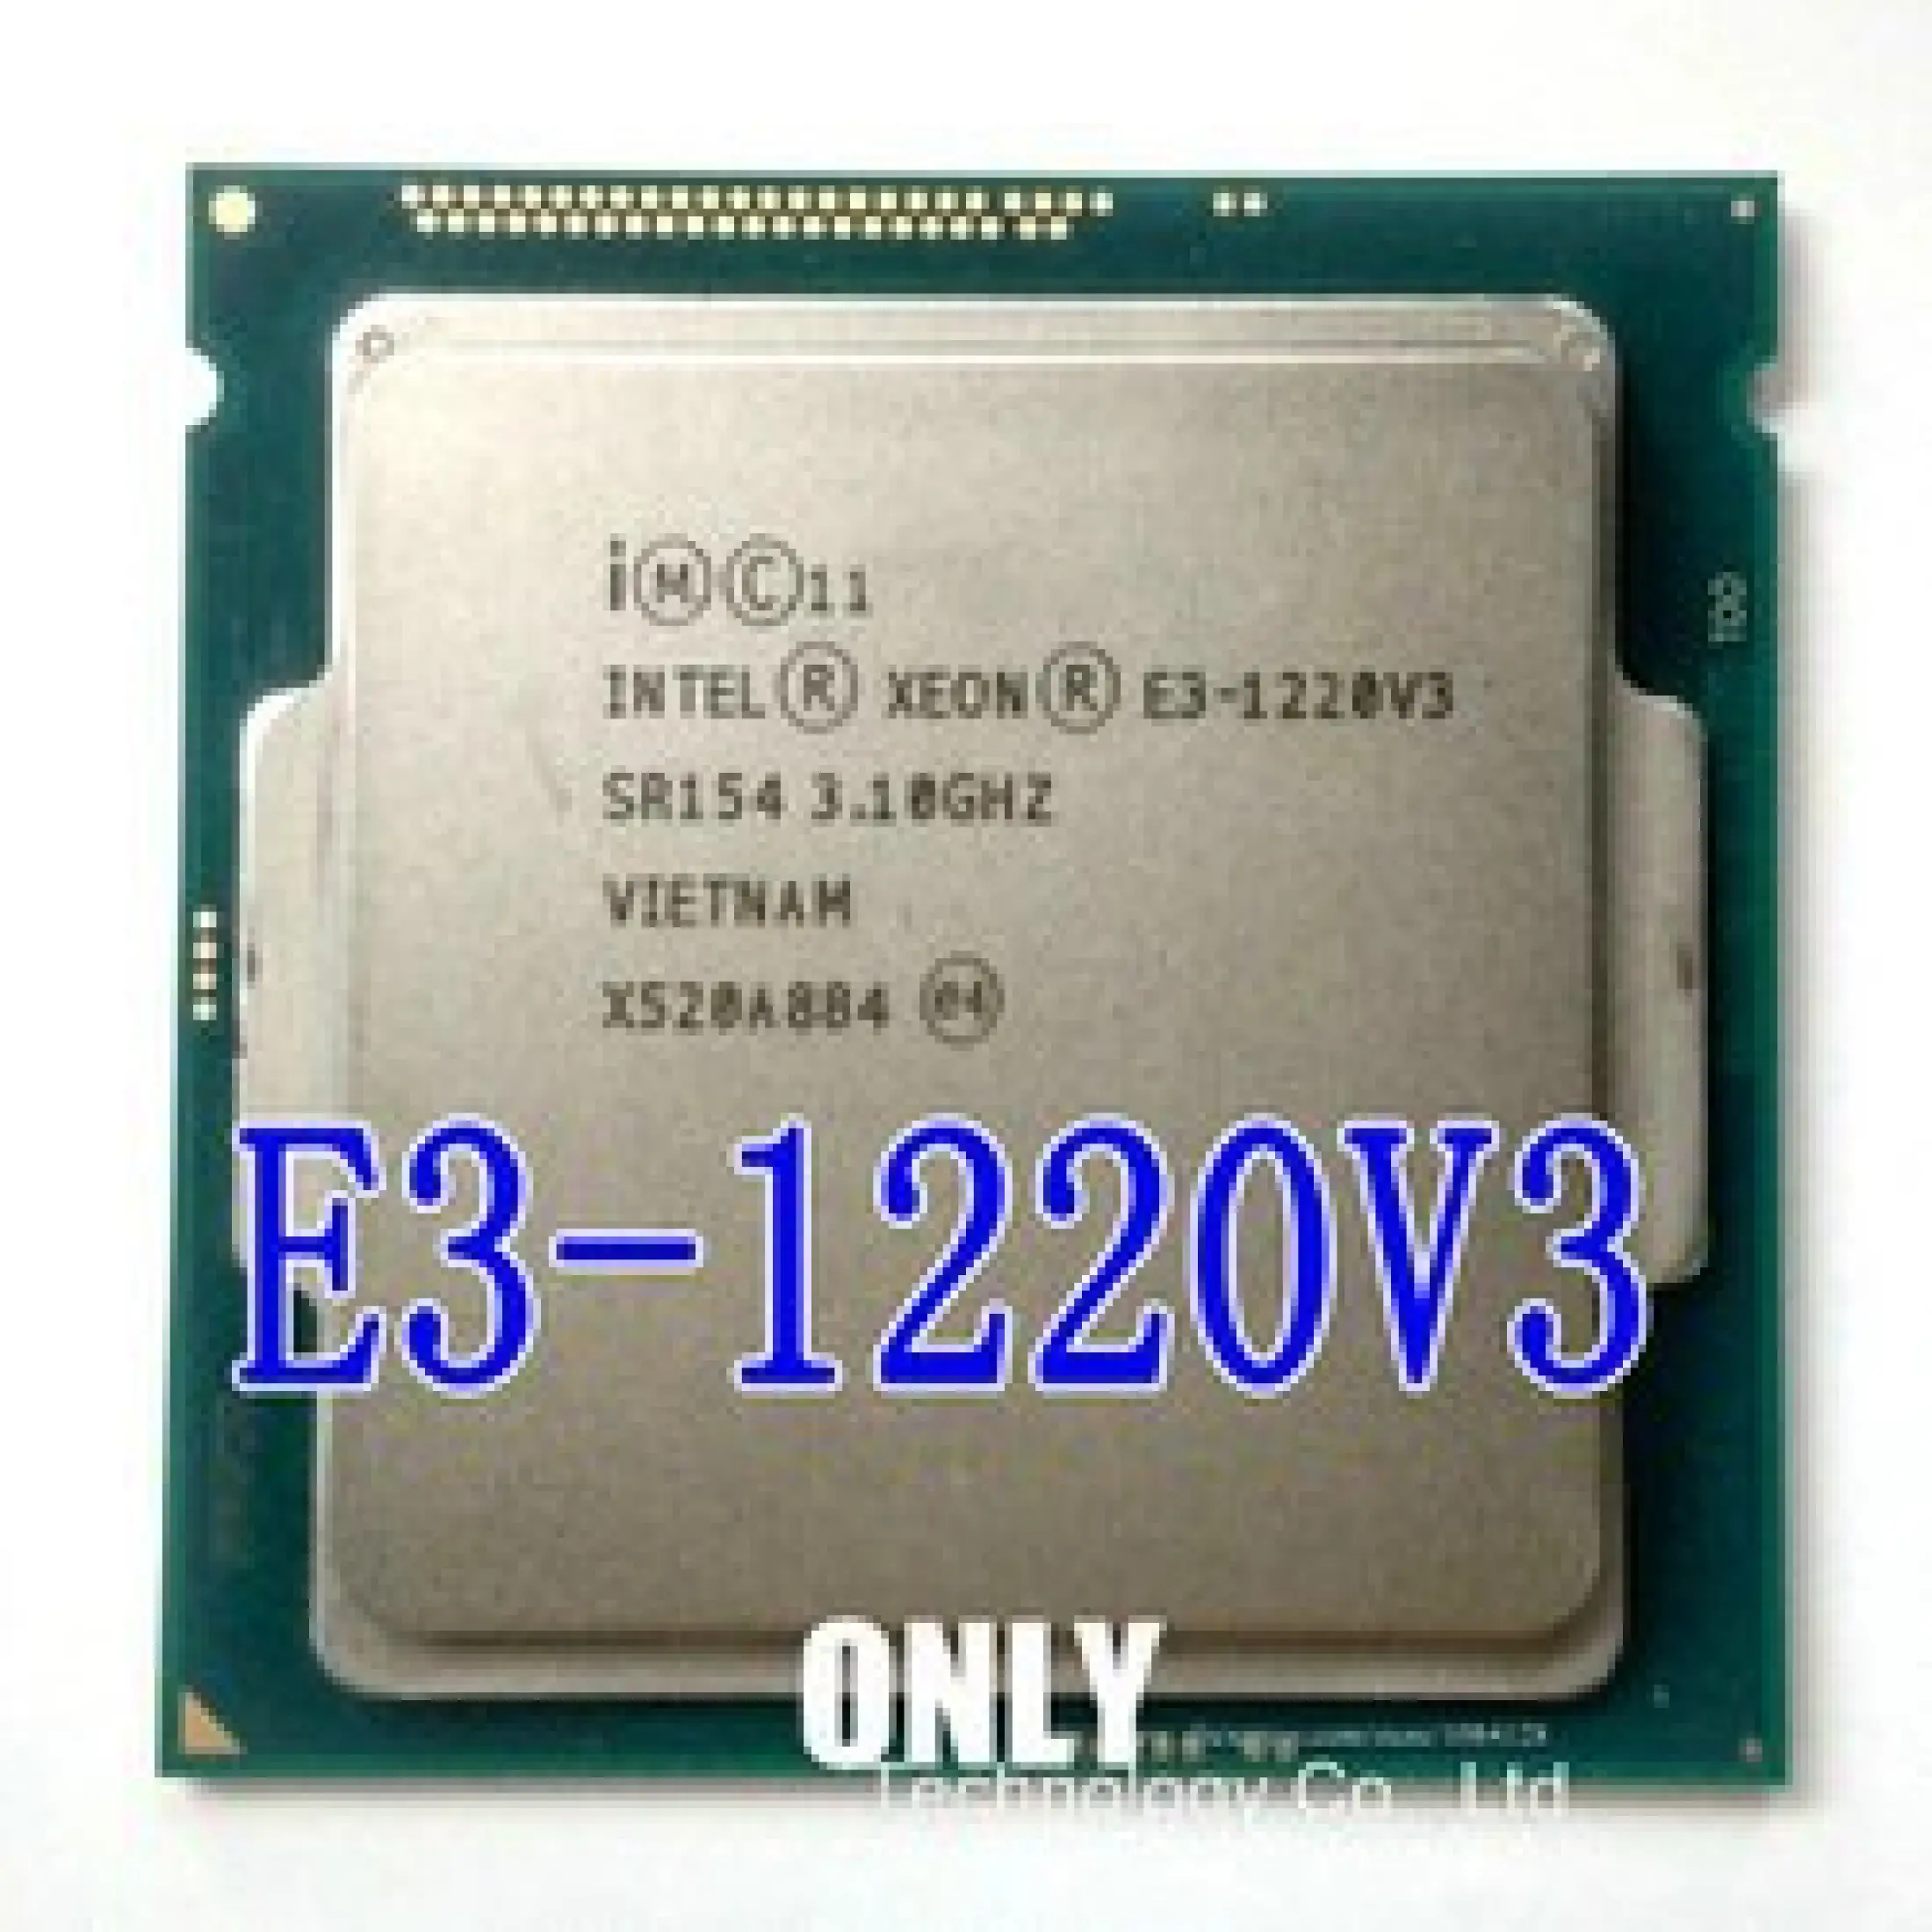 CPU Xeon E3 1220V3 sk 1150 chạy card vga rời bộ xử lý Intel® Xeon®